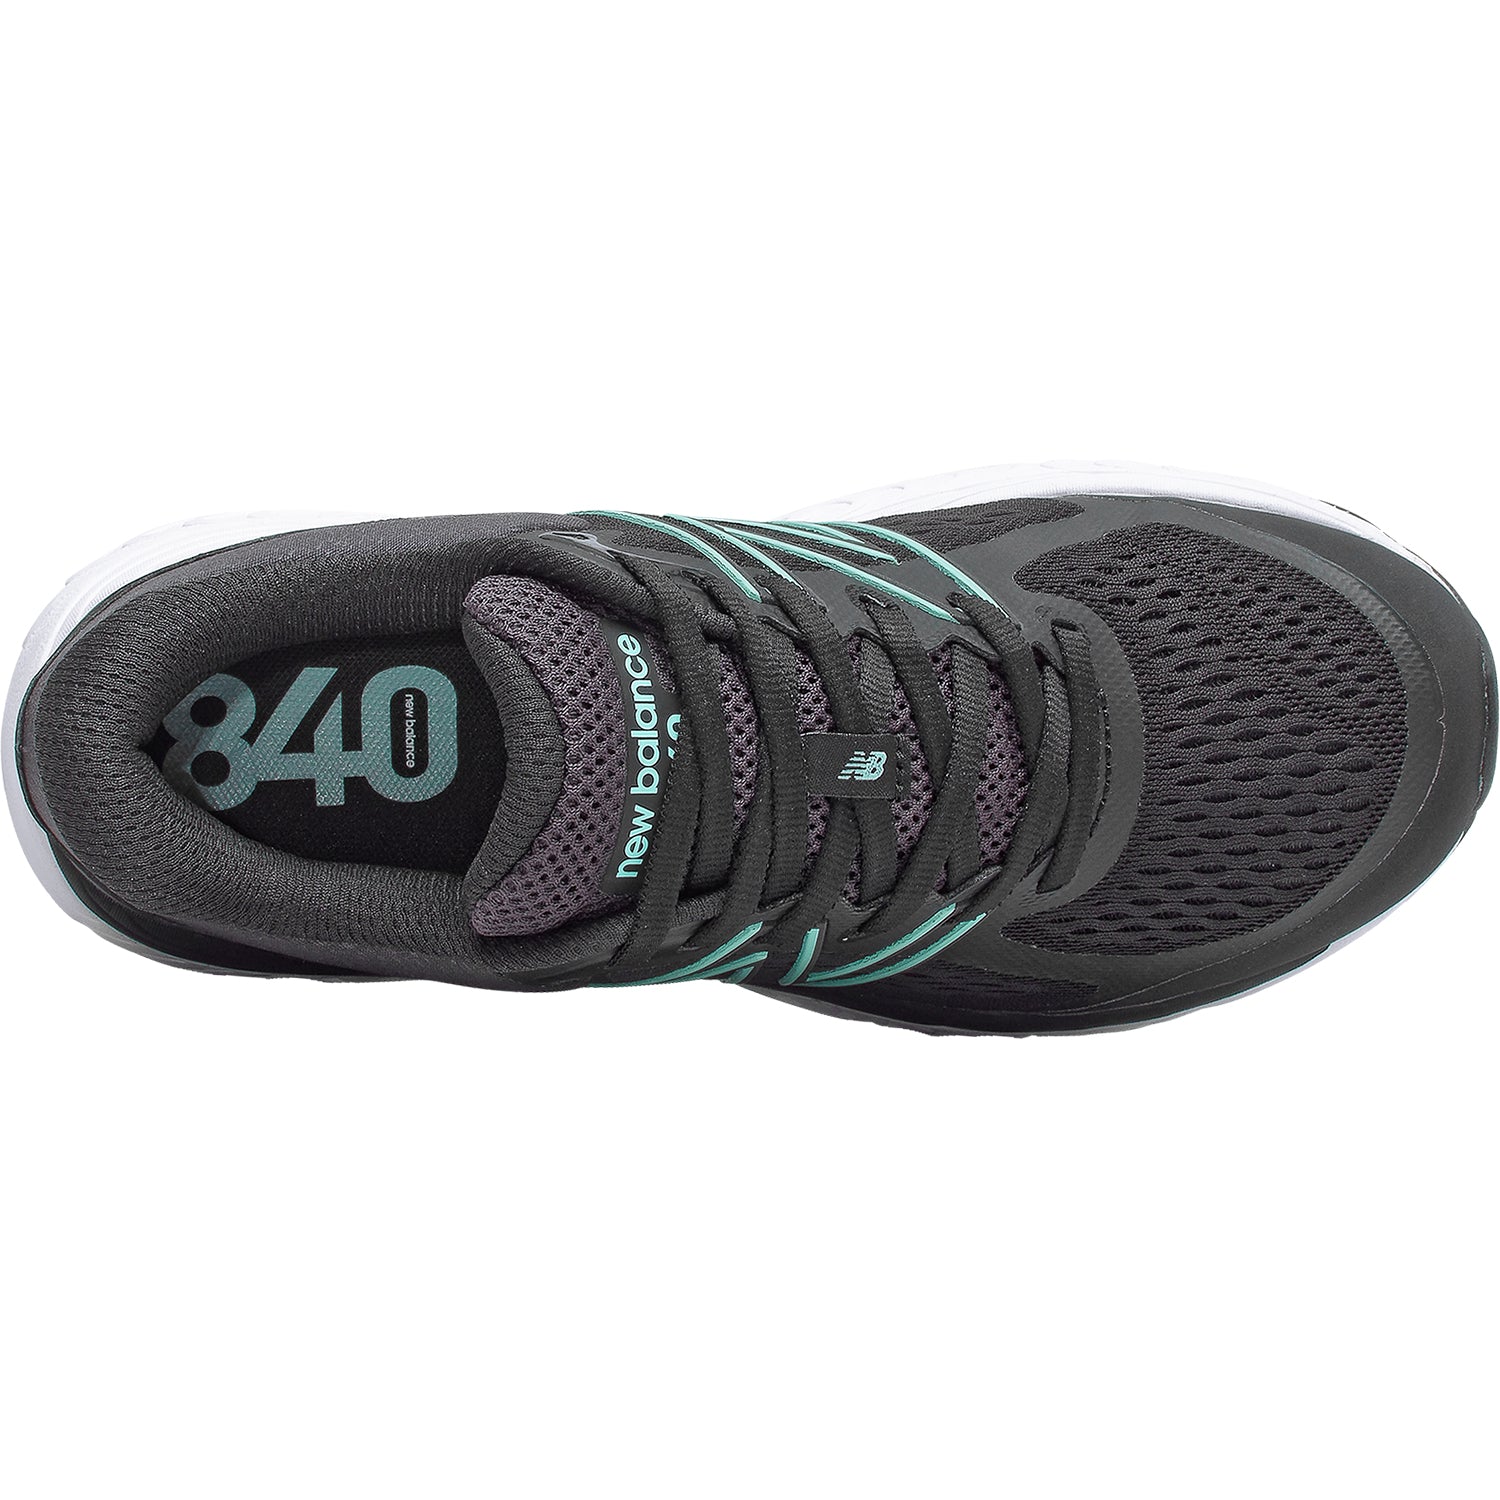 New Balance W840v5 | Women's Running Shoes | Footwear etc.